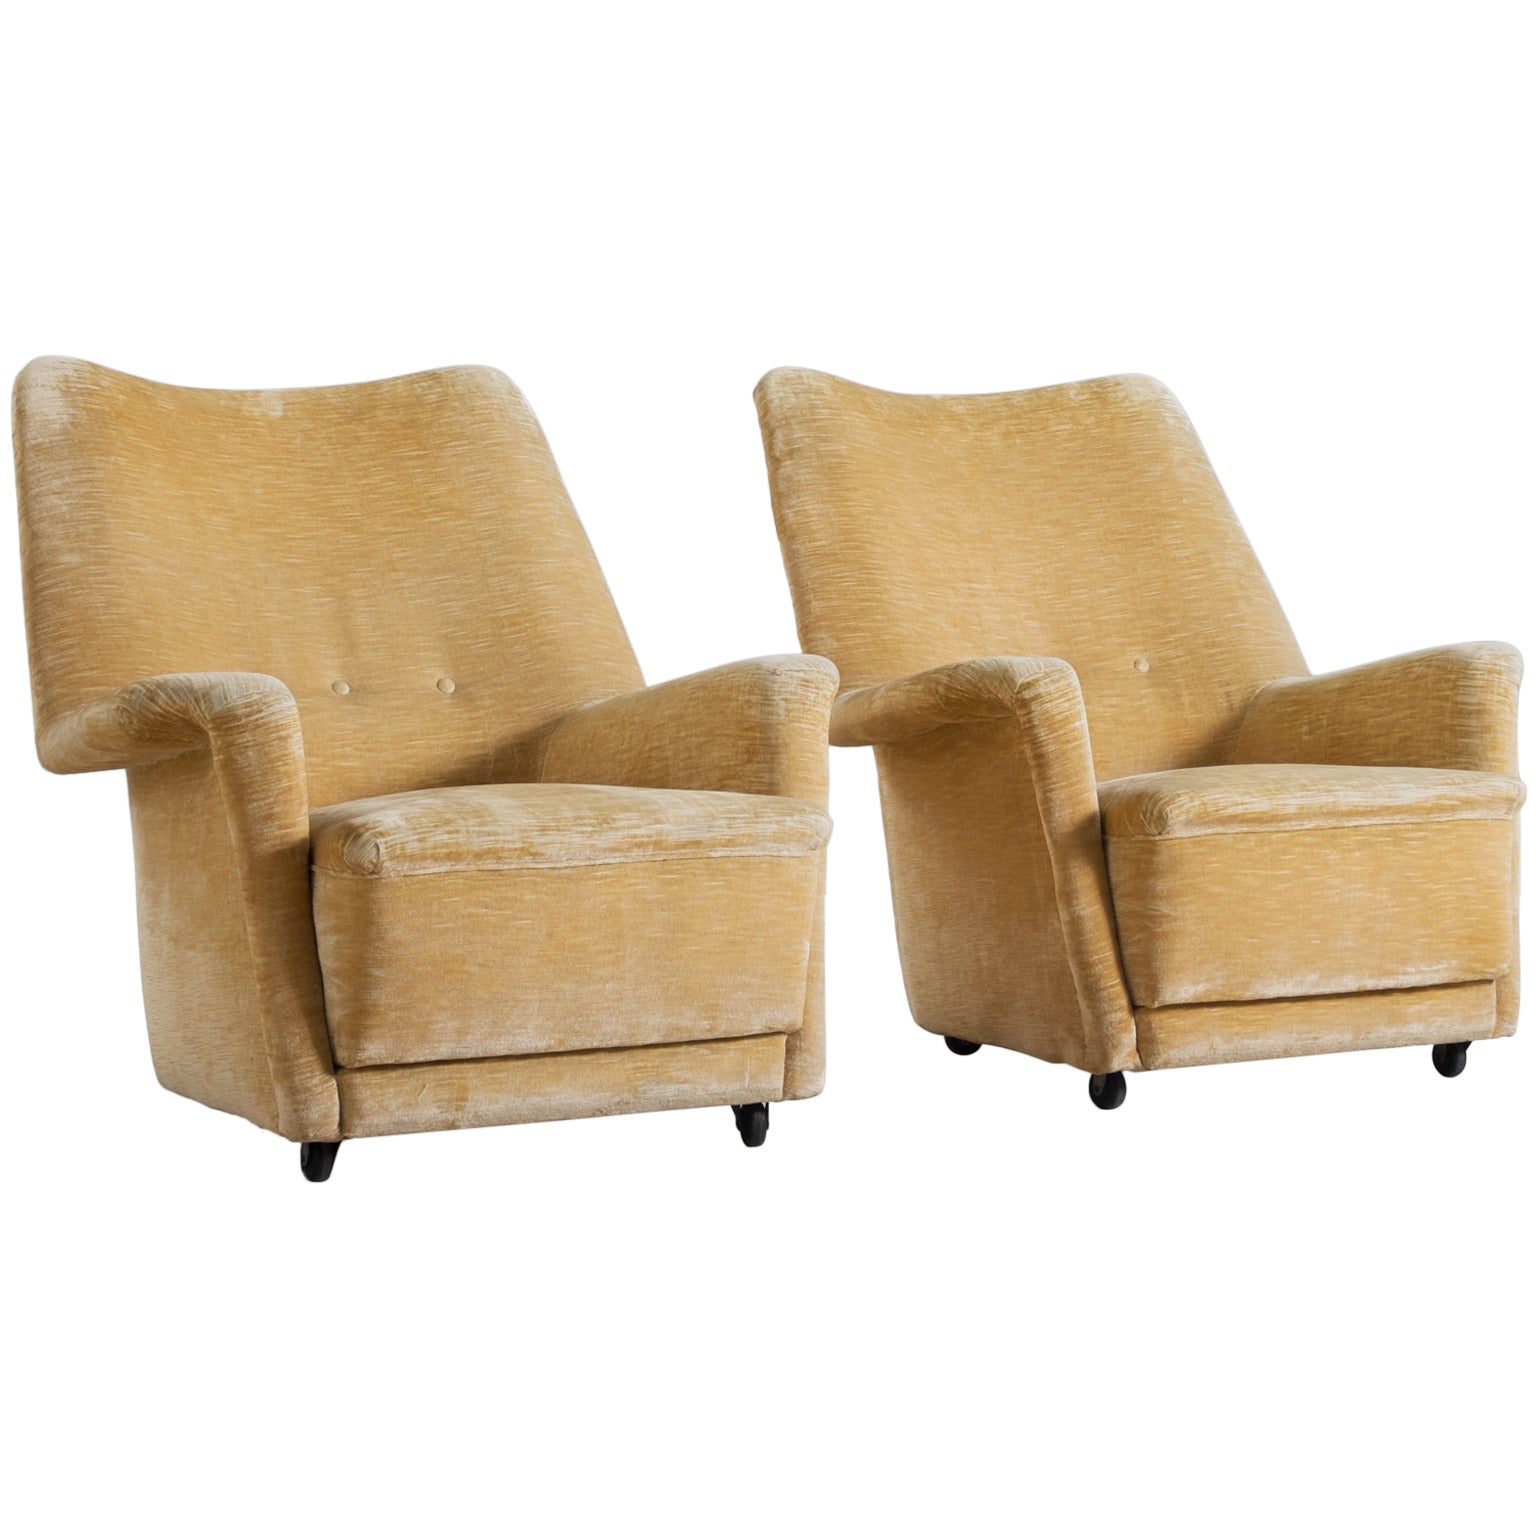 Pair of Italian Lounge Chairs, 1950s